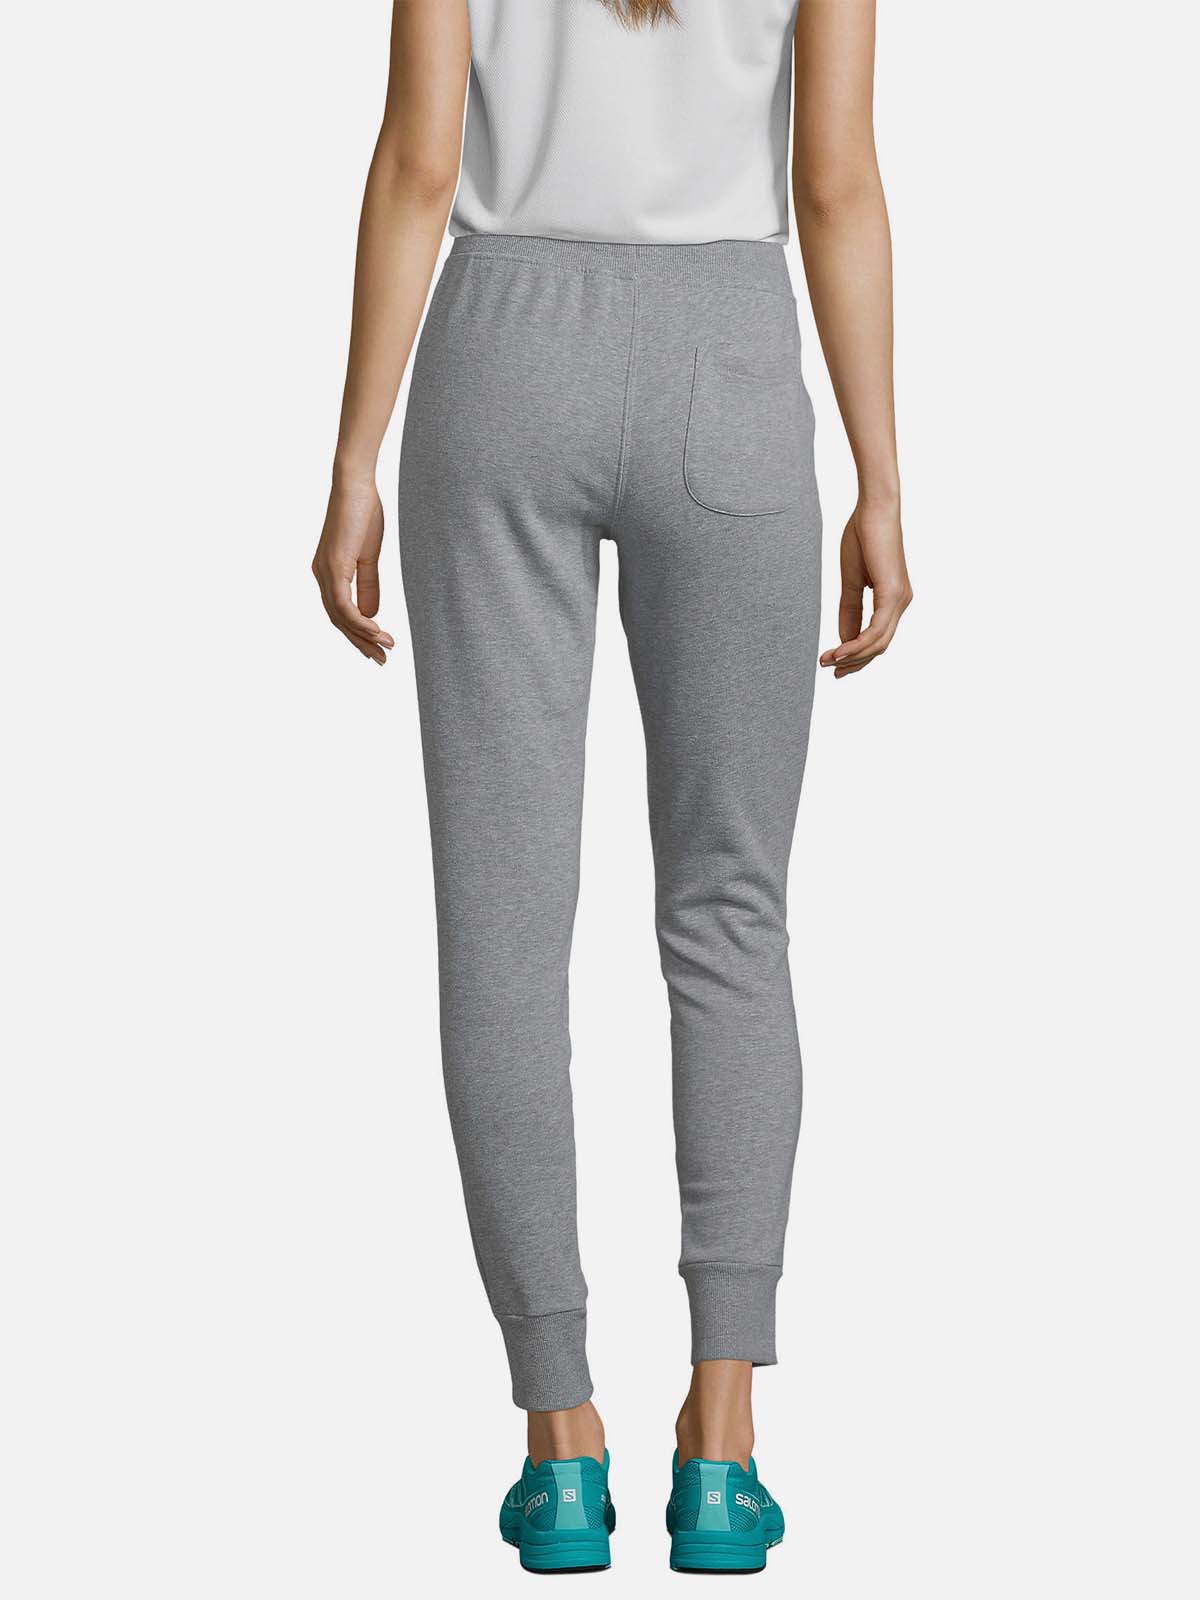 Pantalone Iconic Donna - Grey